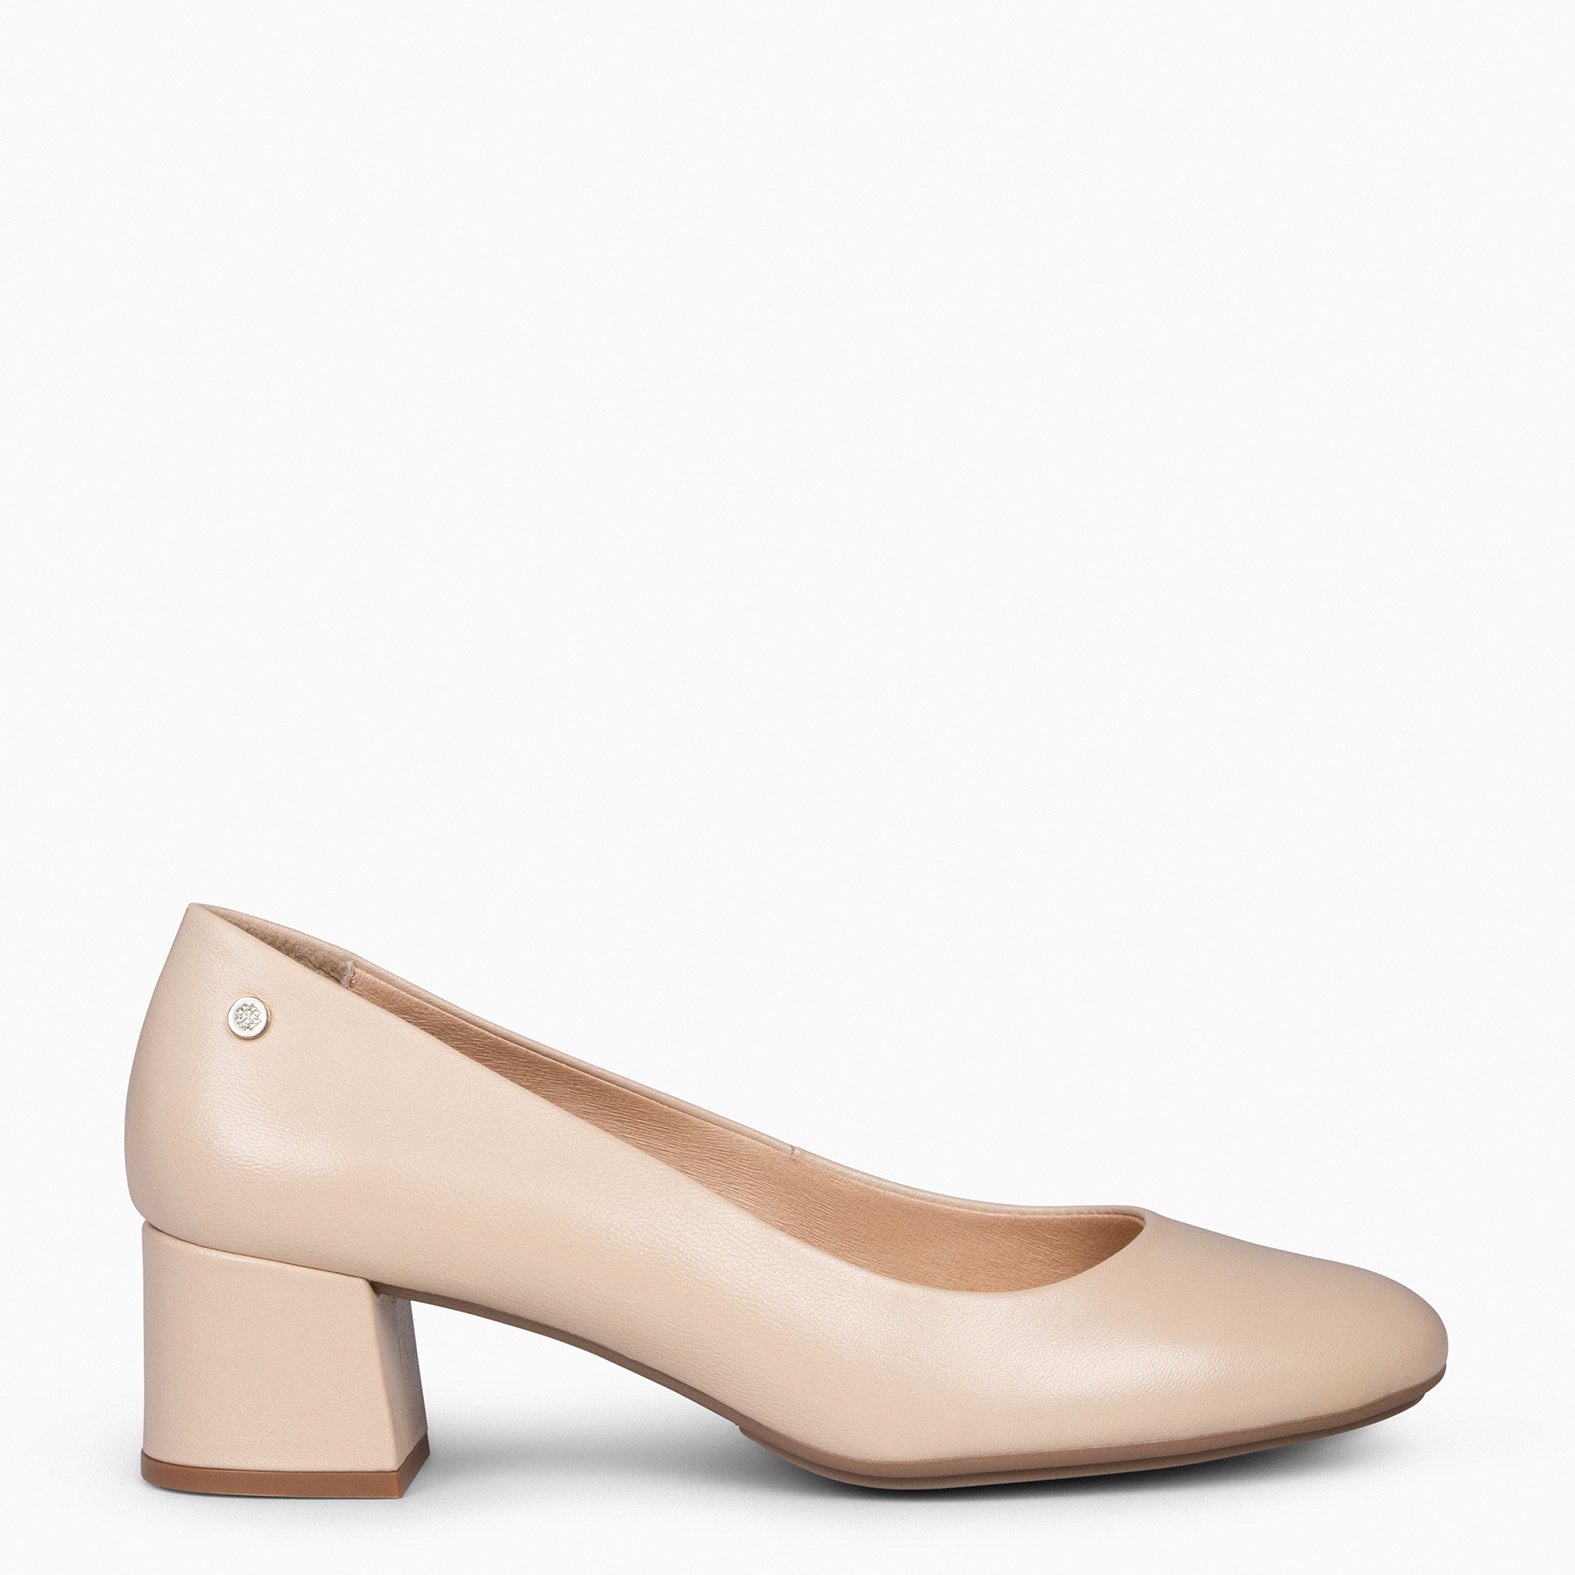 URBAN ROUND – BEIGE nappa leather low heels